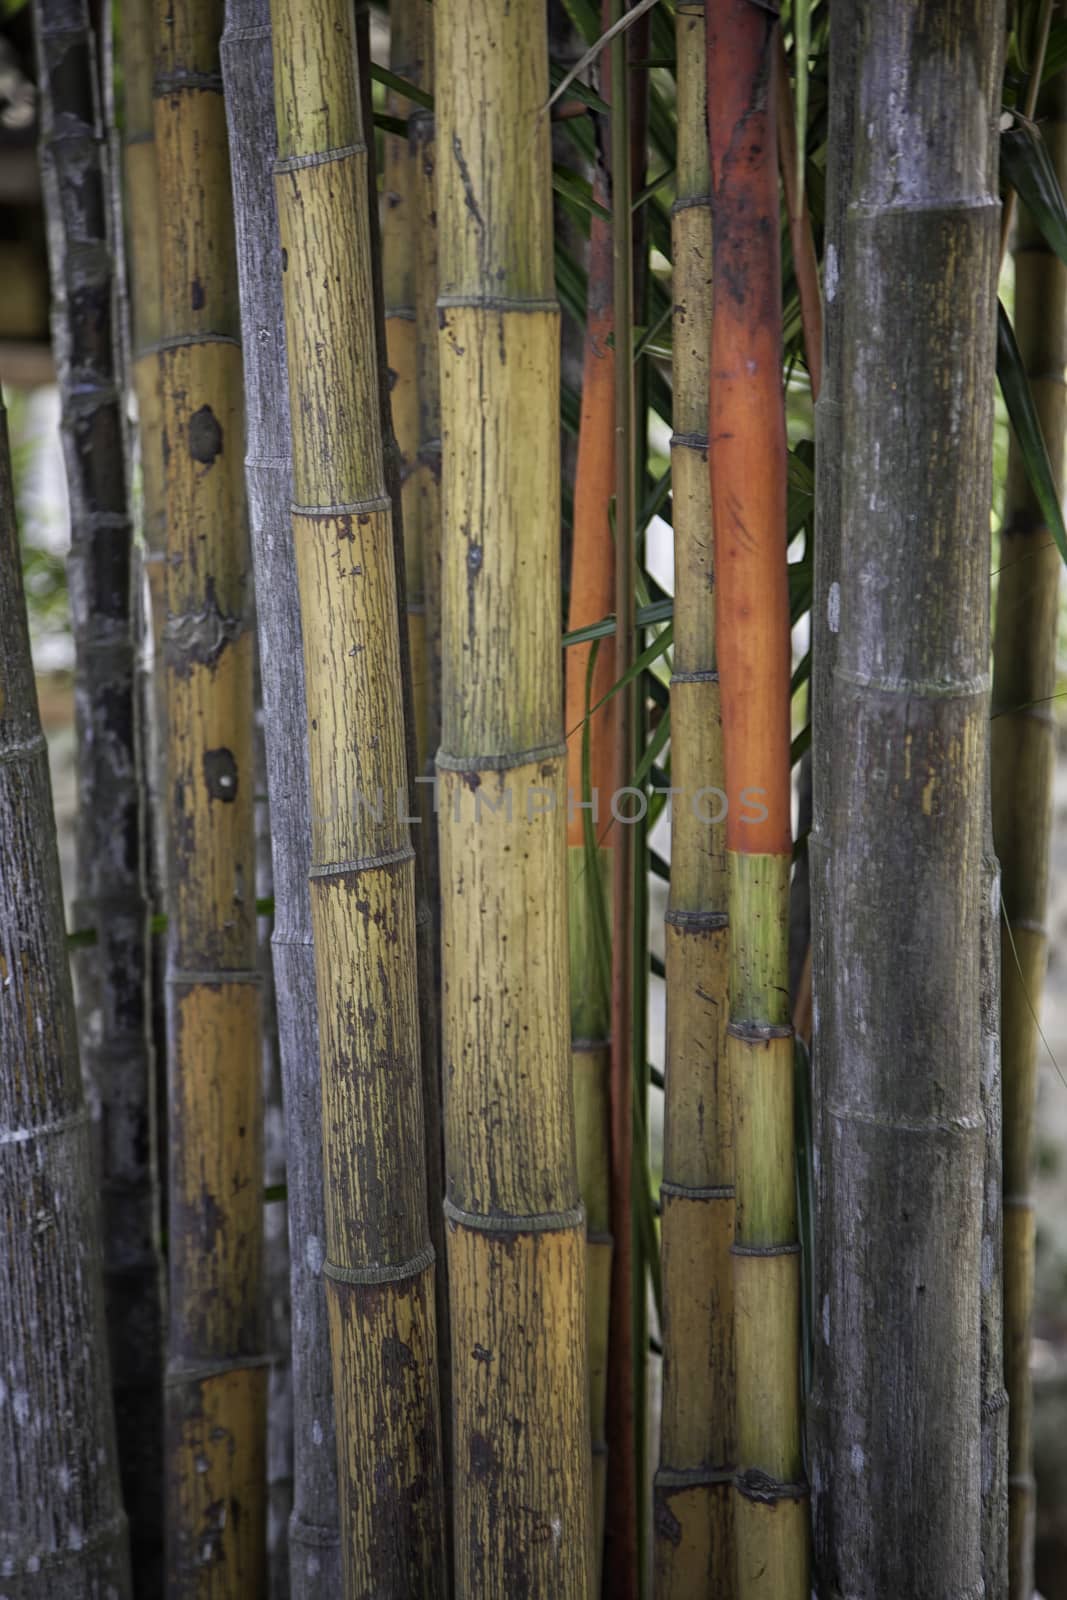 Bamboo close up, nice grunge texture by Lizard